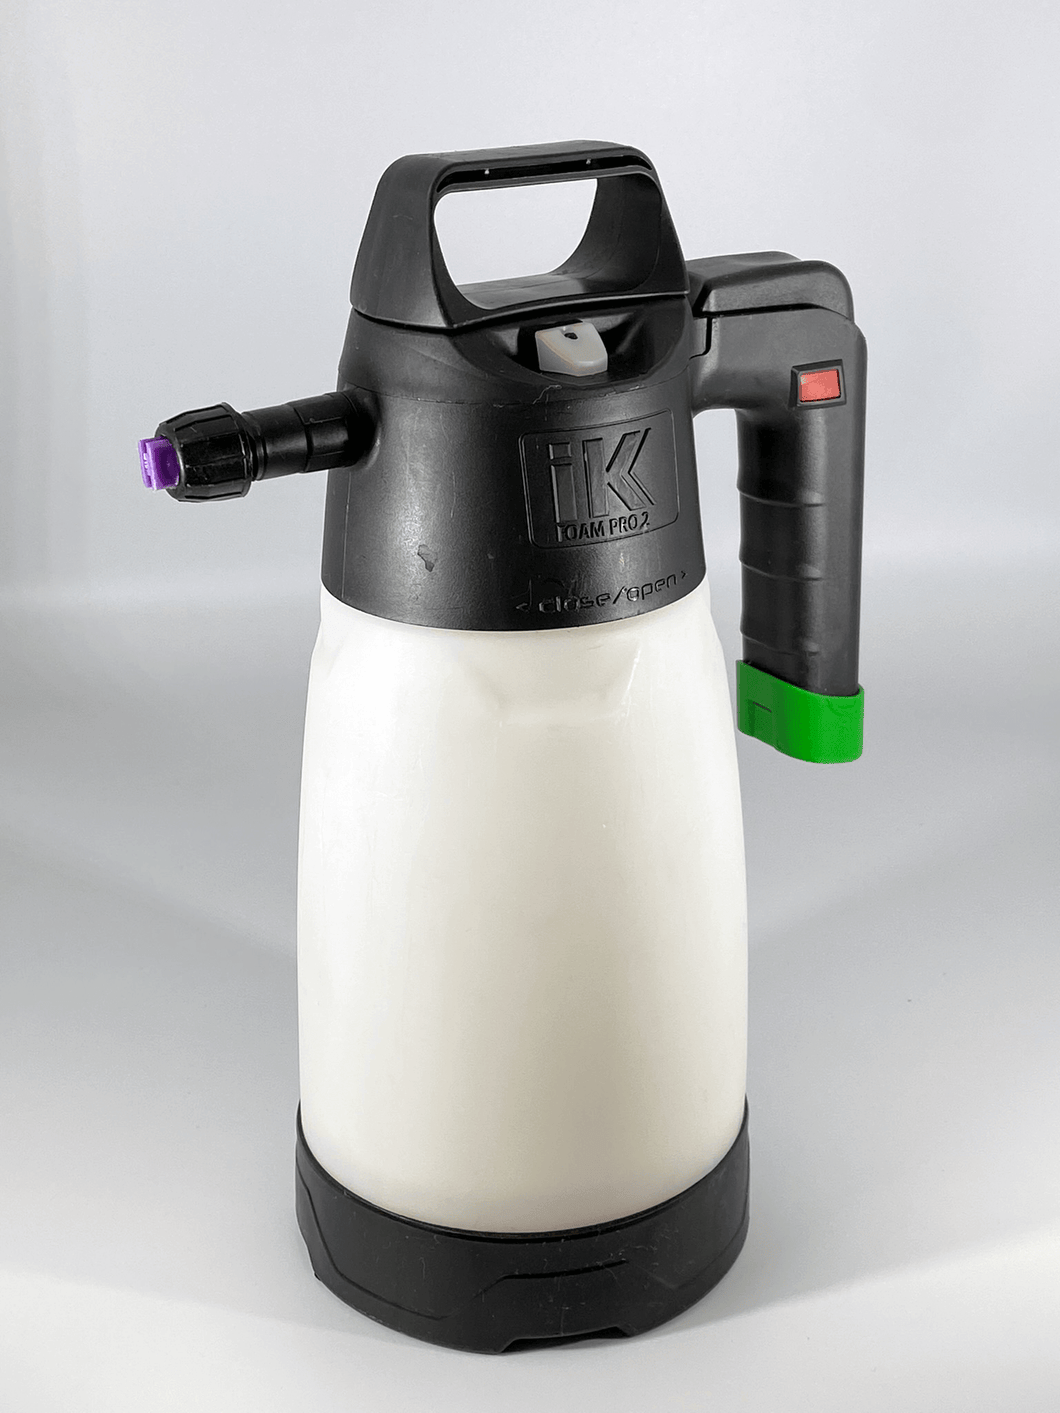 Professional Foamer Sprayer